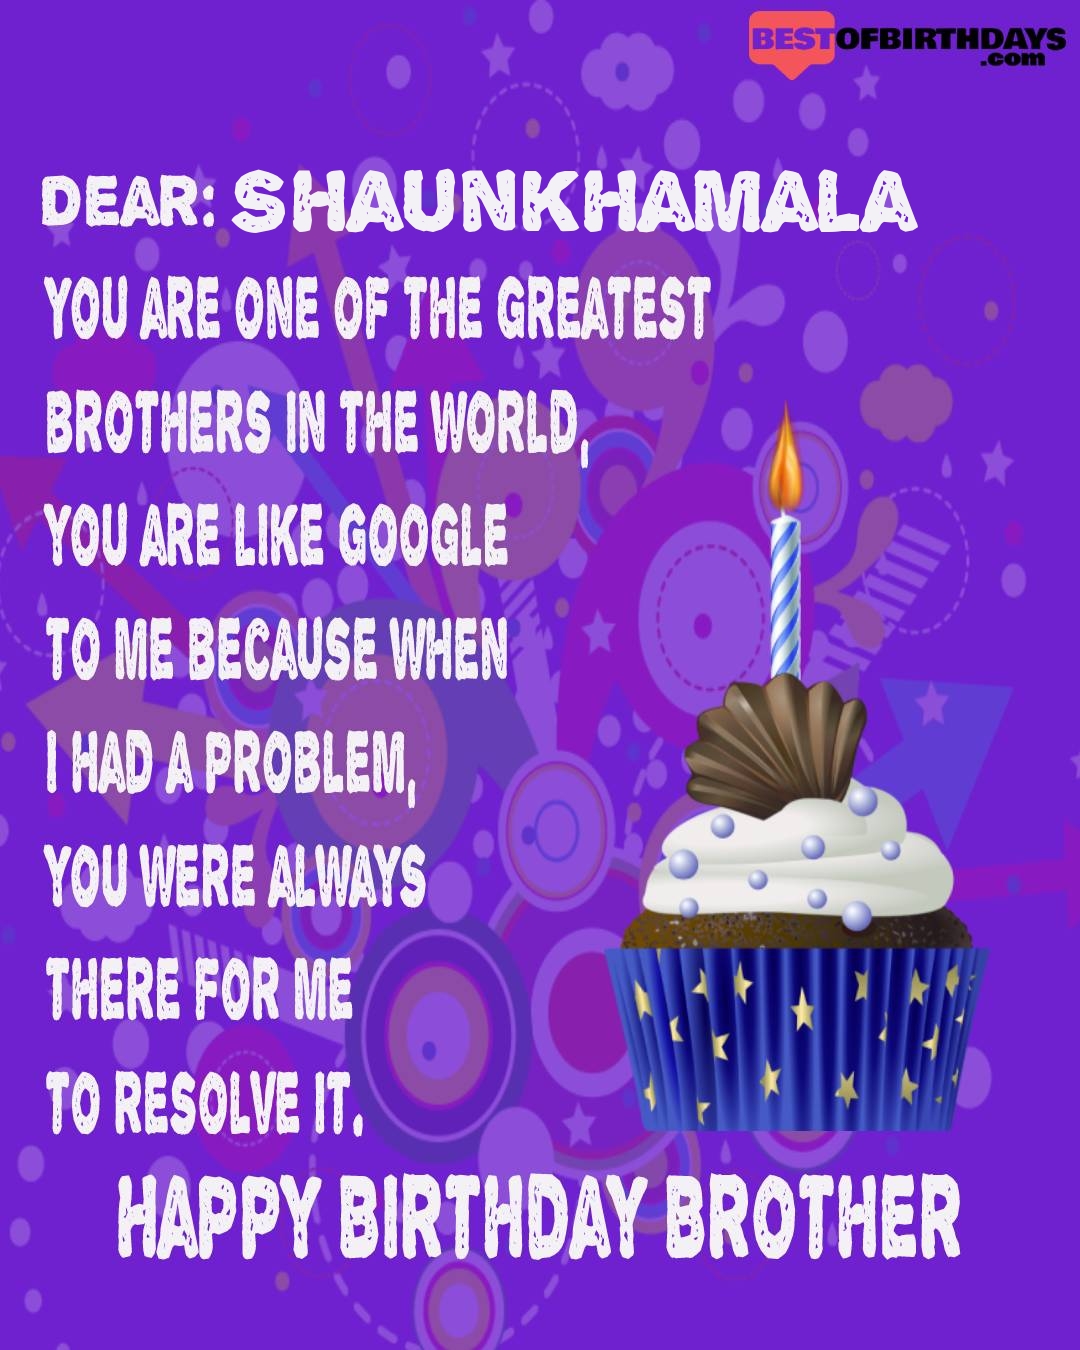 Happy birthday shaunkhamala bhai brother bro